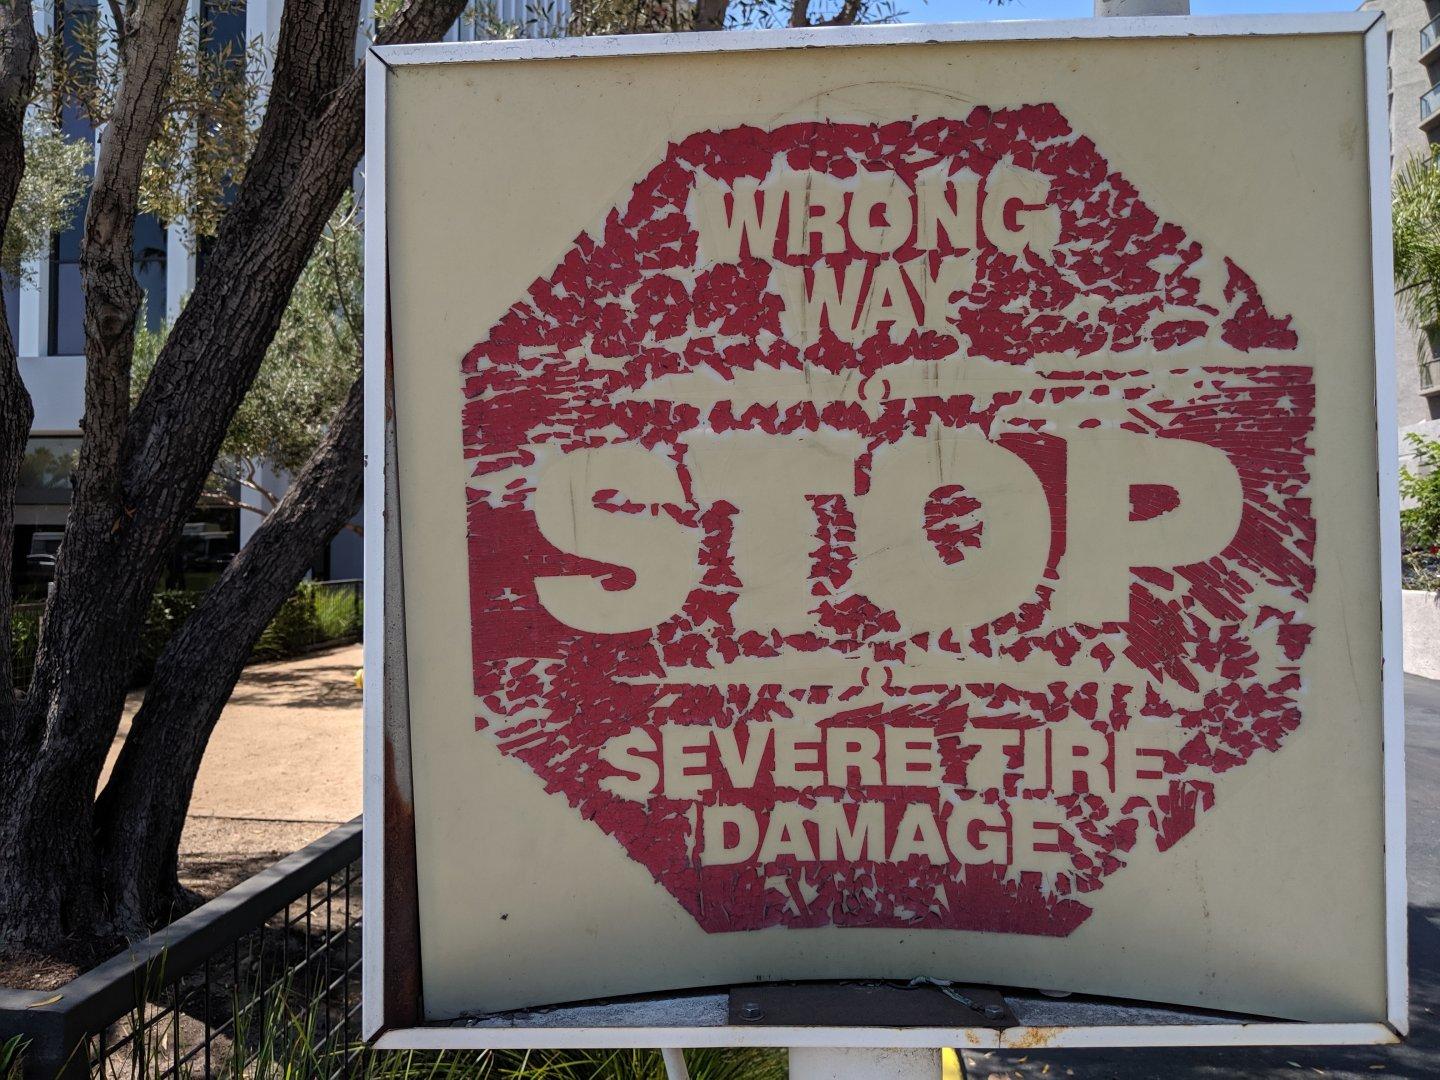 Wrong way. #decay #signs #StopSign